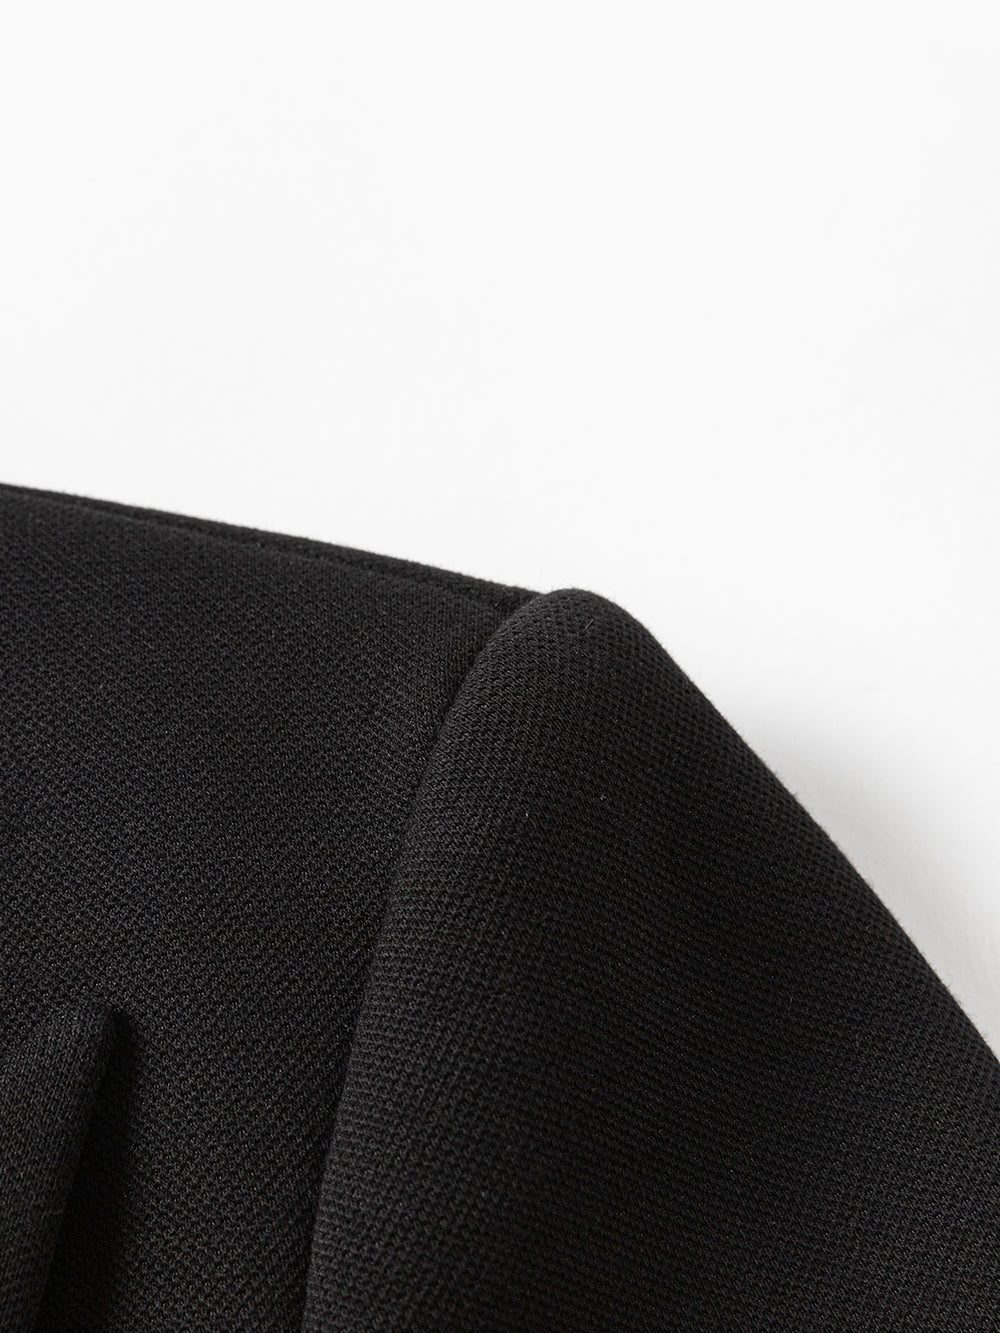 MUKZIN Suit Original Look-thin Fashion Comfort Coat